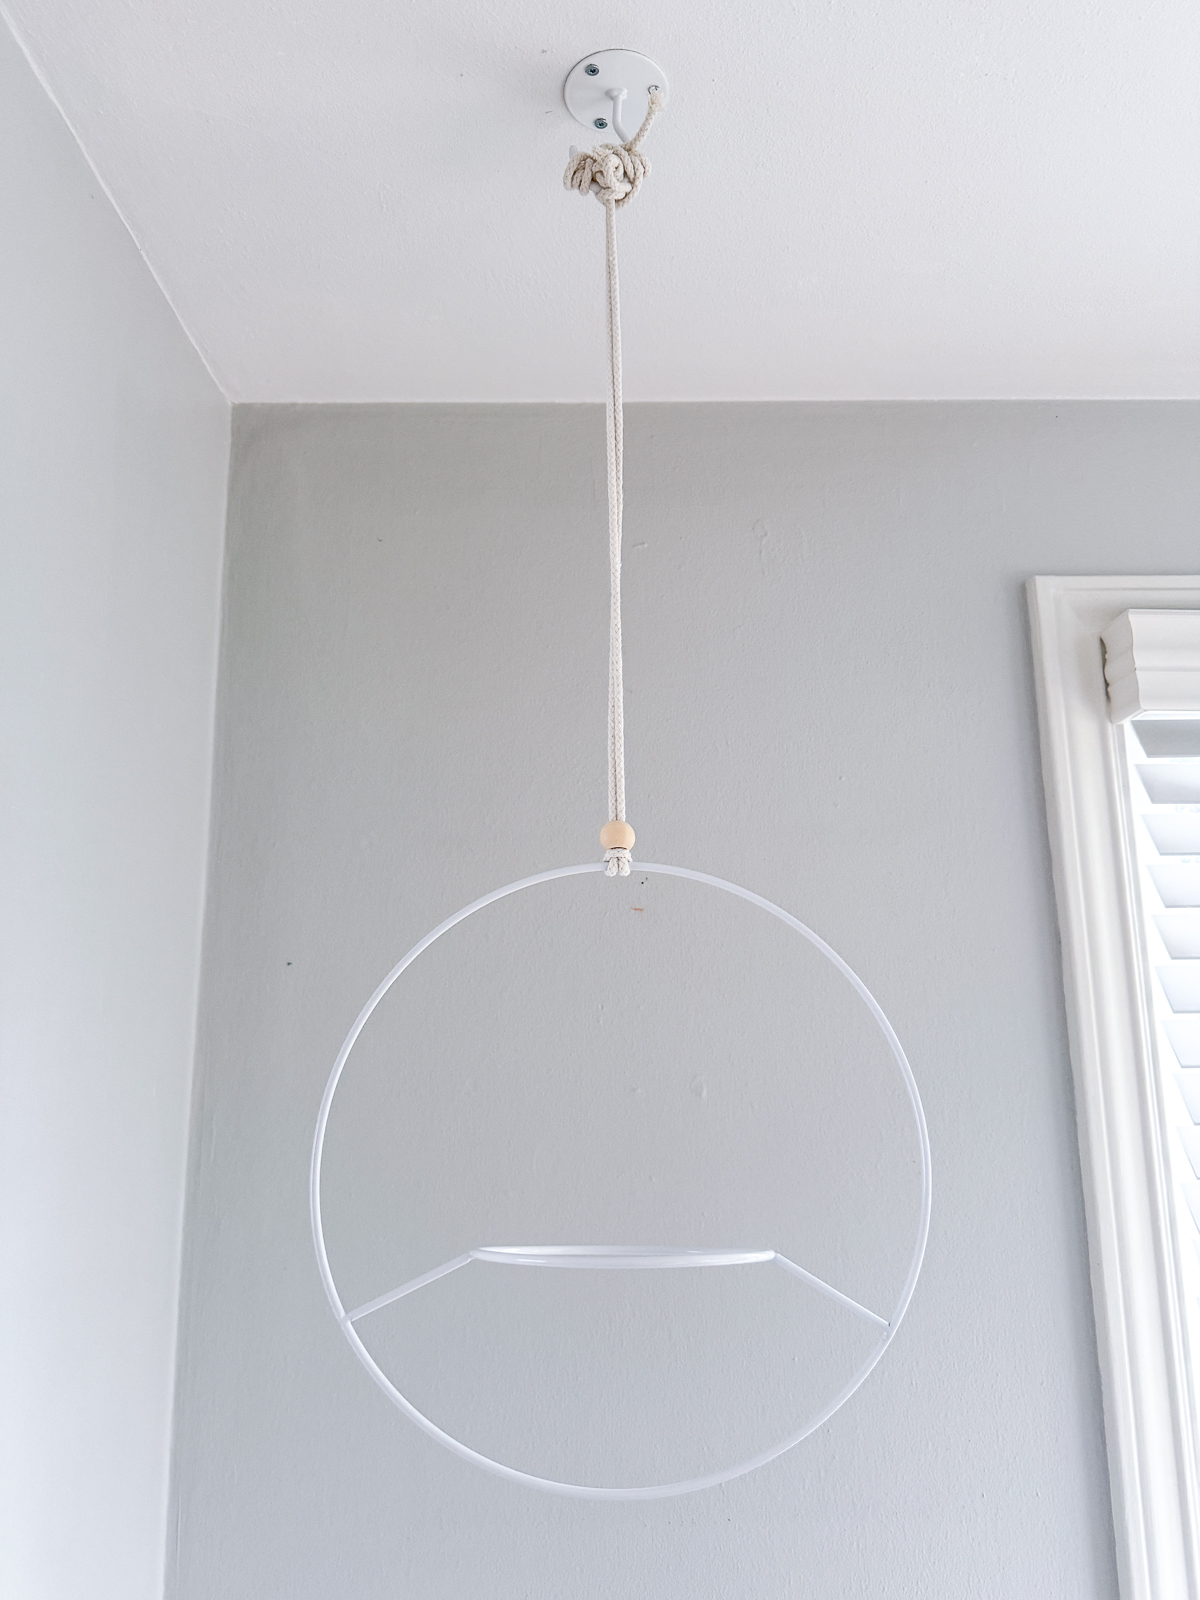 Ceiling Hook  Ceiling rings, Ceiling hooks, Drywall installation